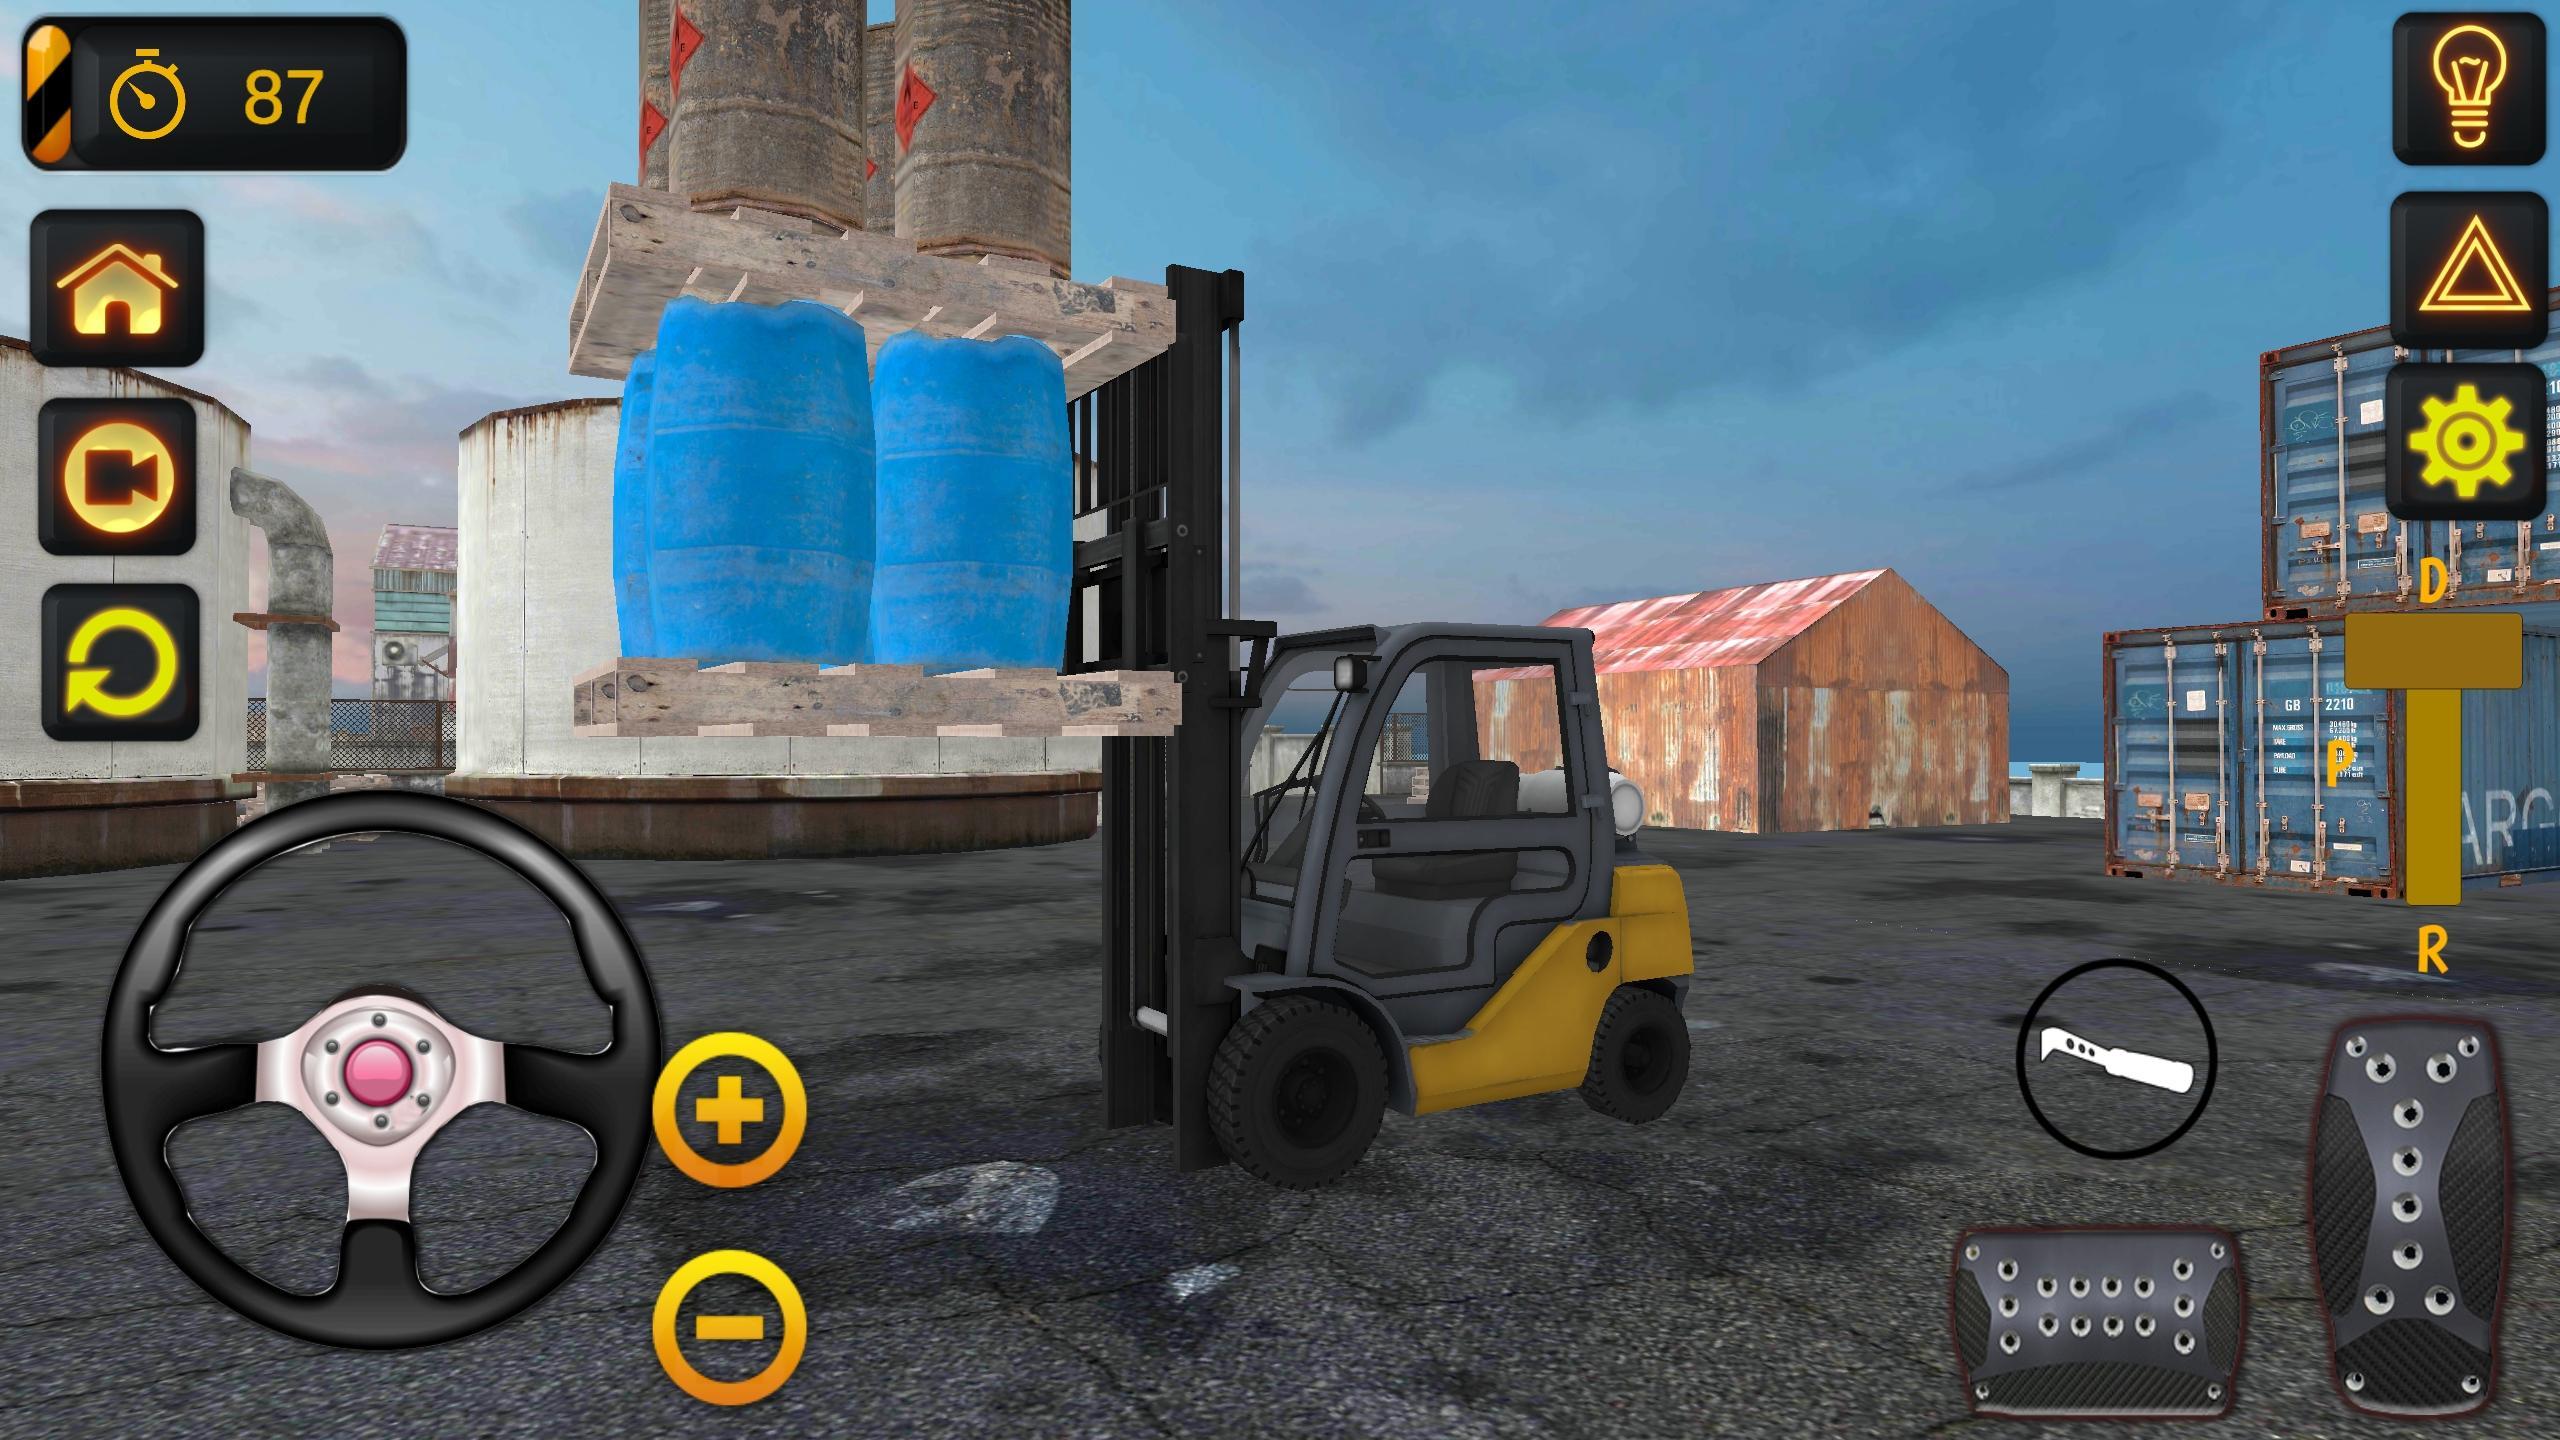 Forklift Simulator For Android Apk Download